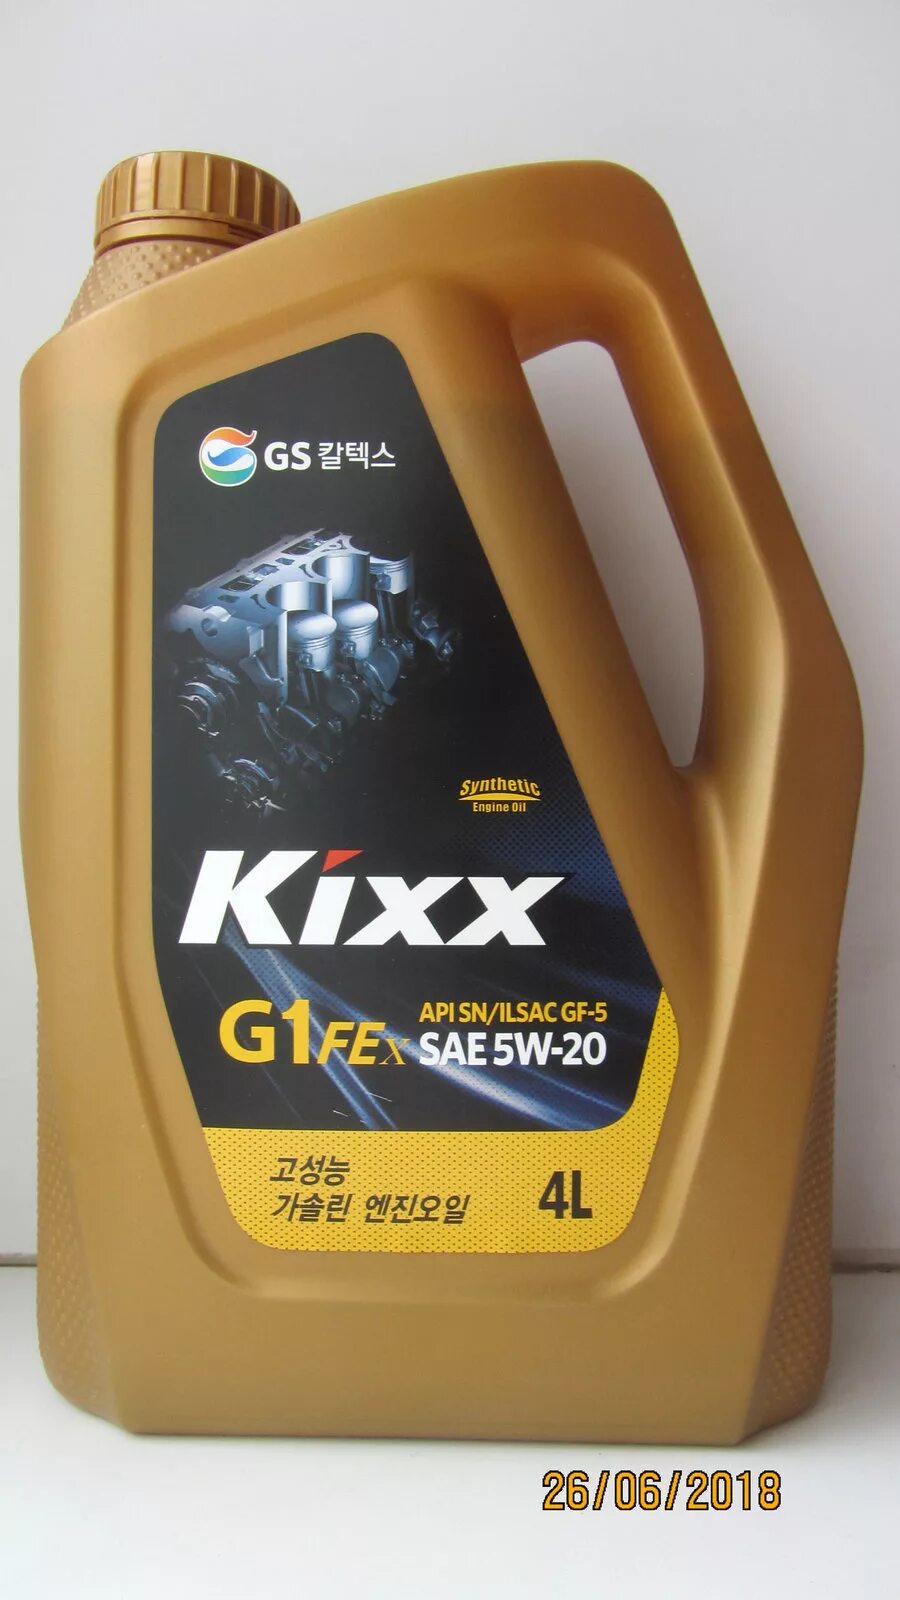 Api sh масло. Kixx g1 FEX 5w-20. Масло Kixx 5w-30 ILSAC gf5 артикул. Масла с допуском gf4 gf5. Kixx 5w20 SN Plus.